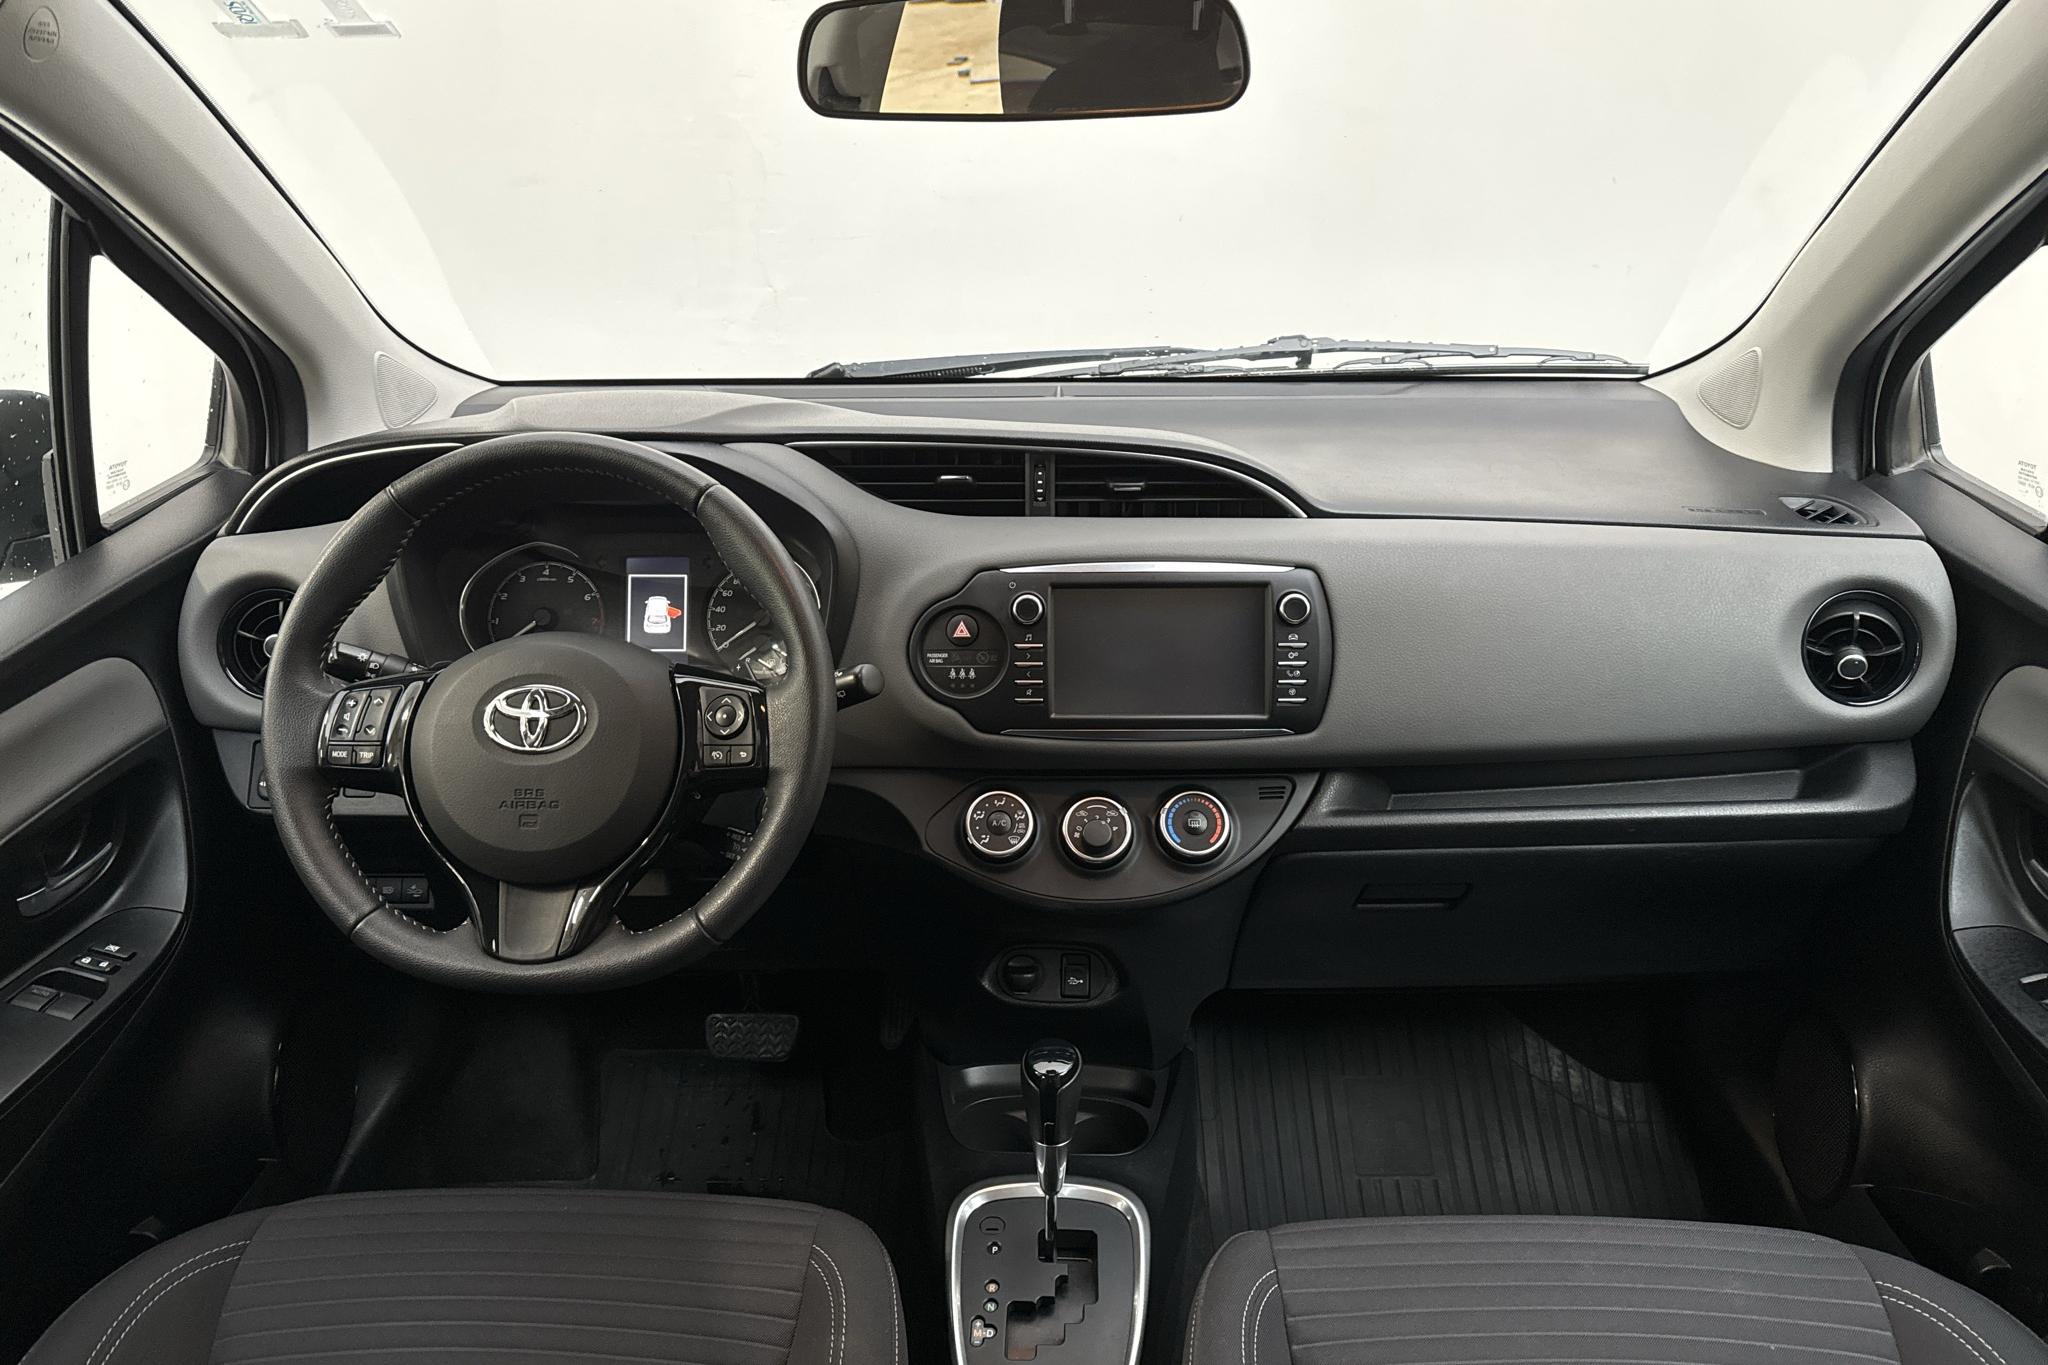 Toyota Yaris 1.5 5dr (111hk) - 42 840 km - Automatic - silver - 2019